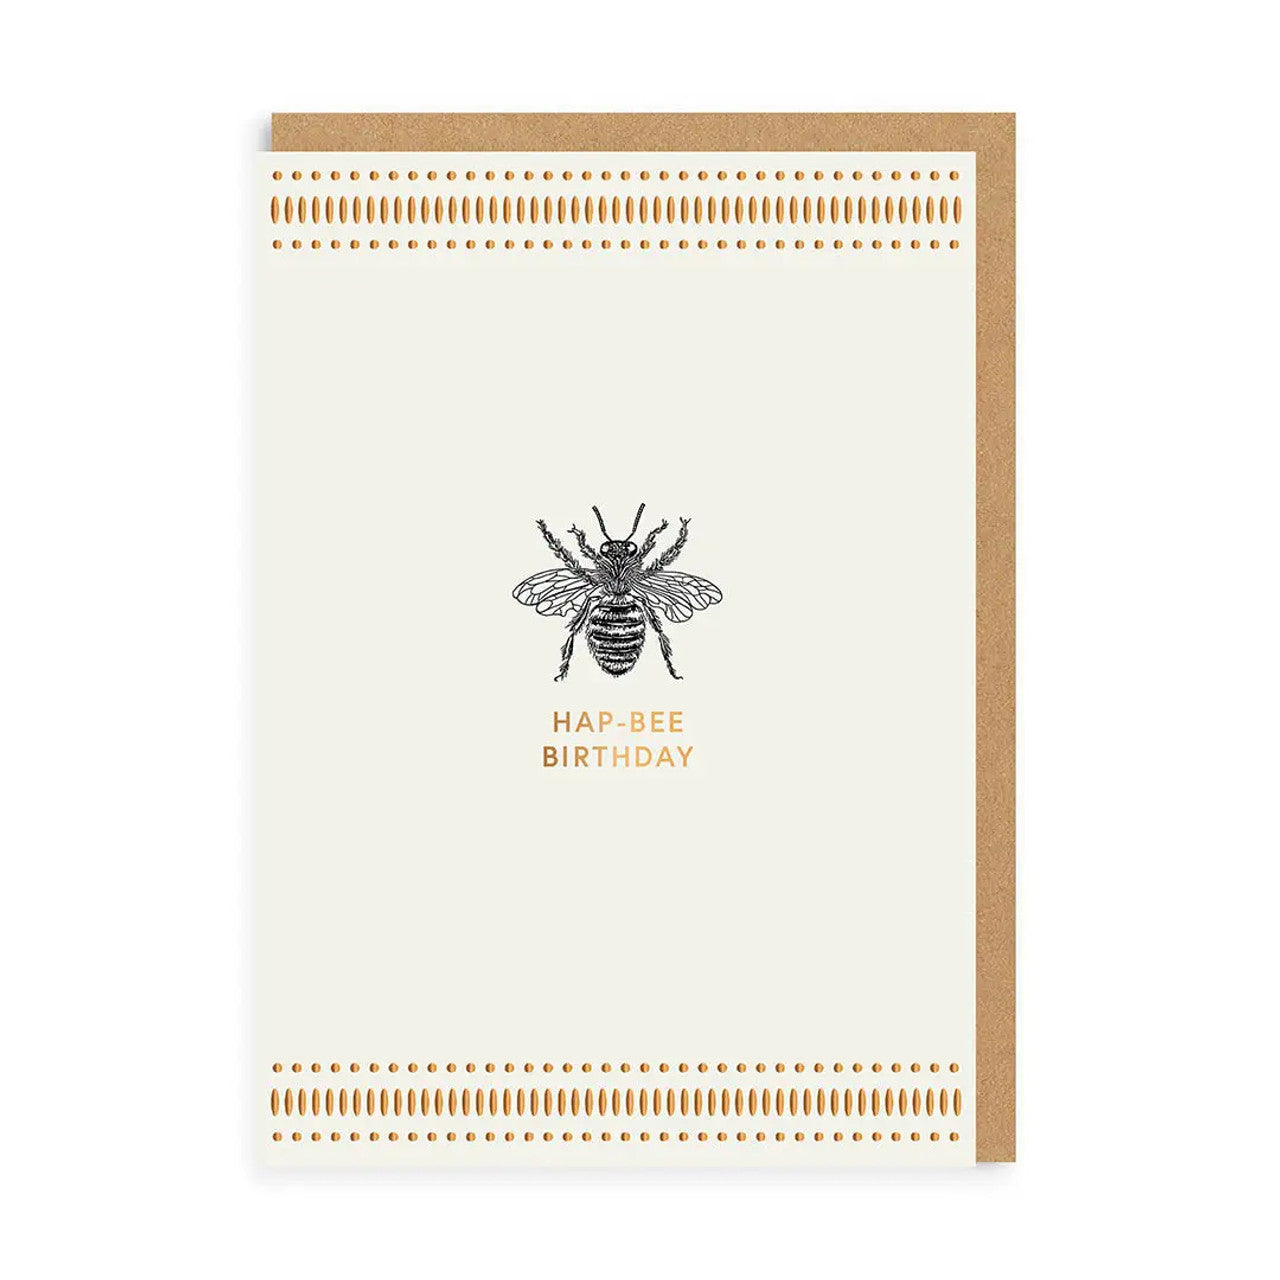 Birthday Card text reads "Hap-Bee Birthday"